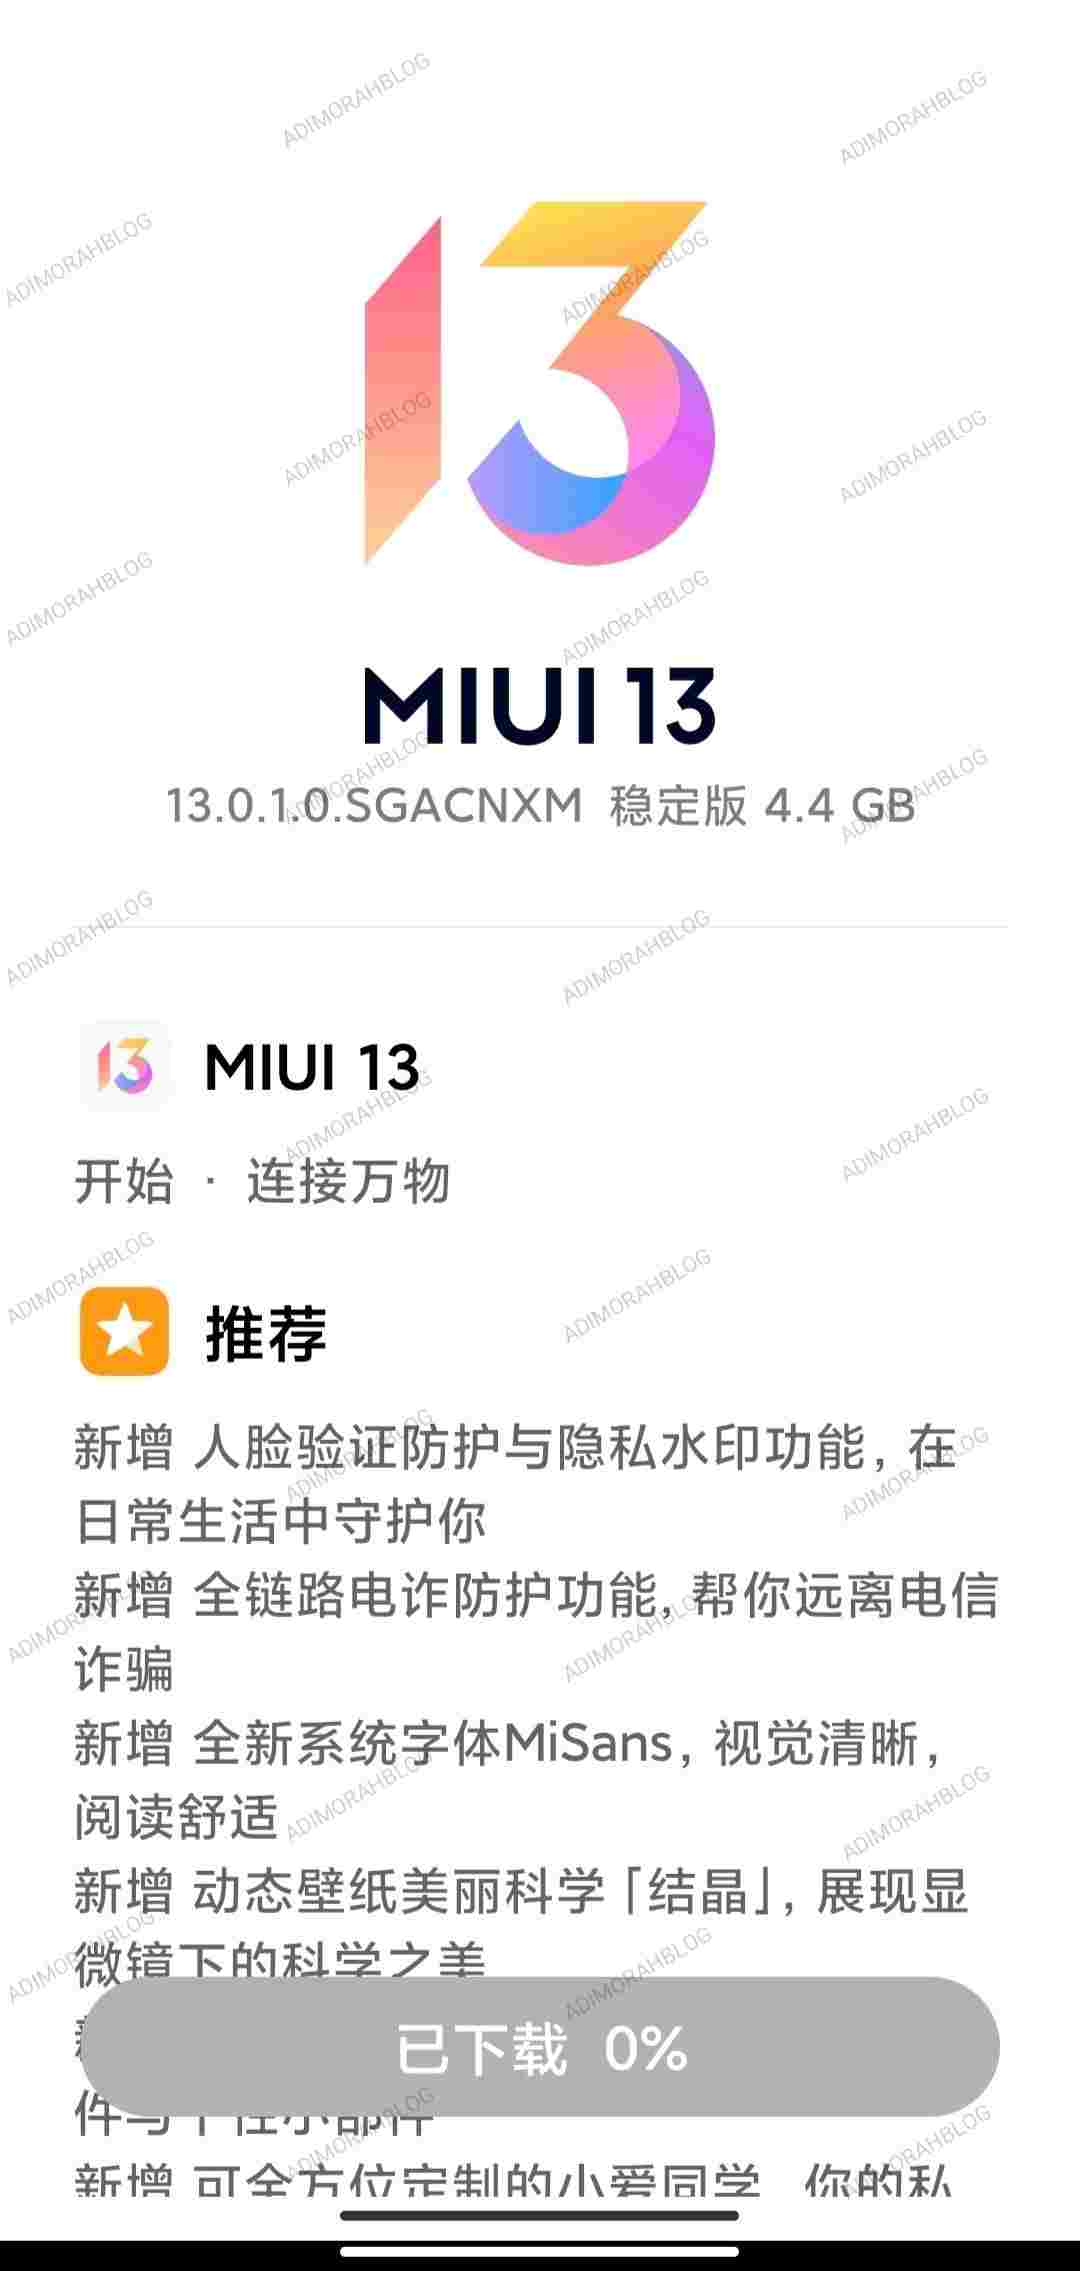 Xiaomi mi 10S Android 12-based MIUI 13 update